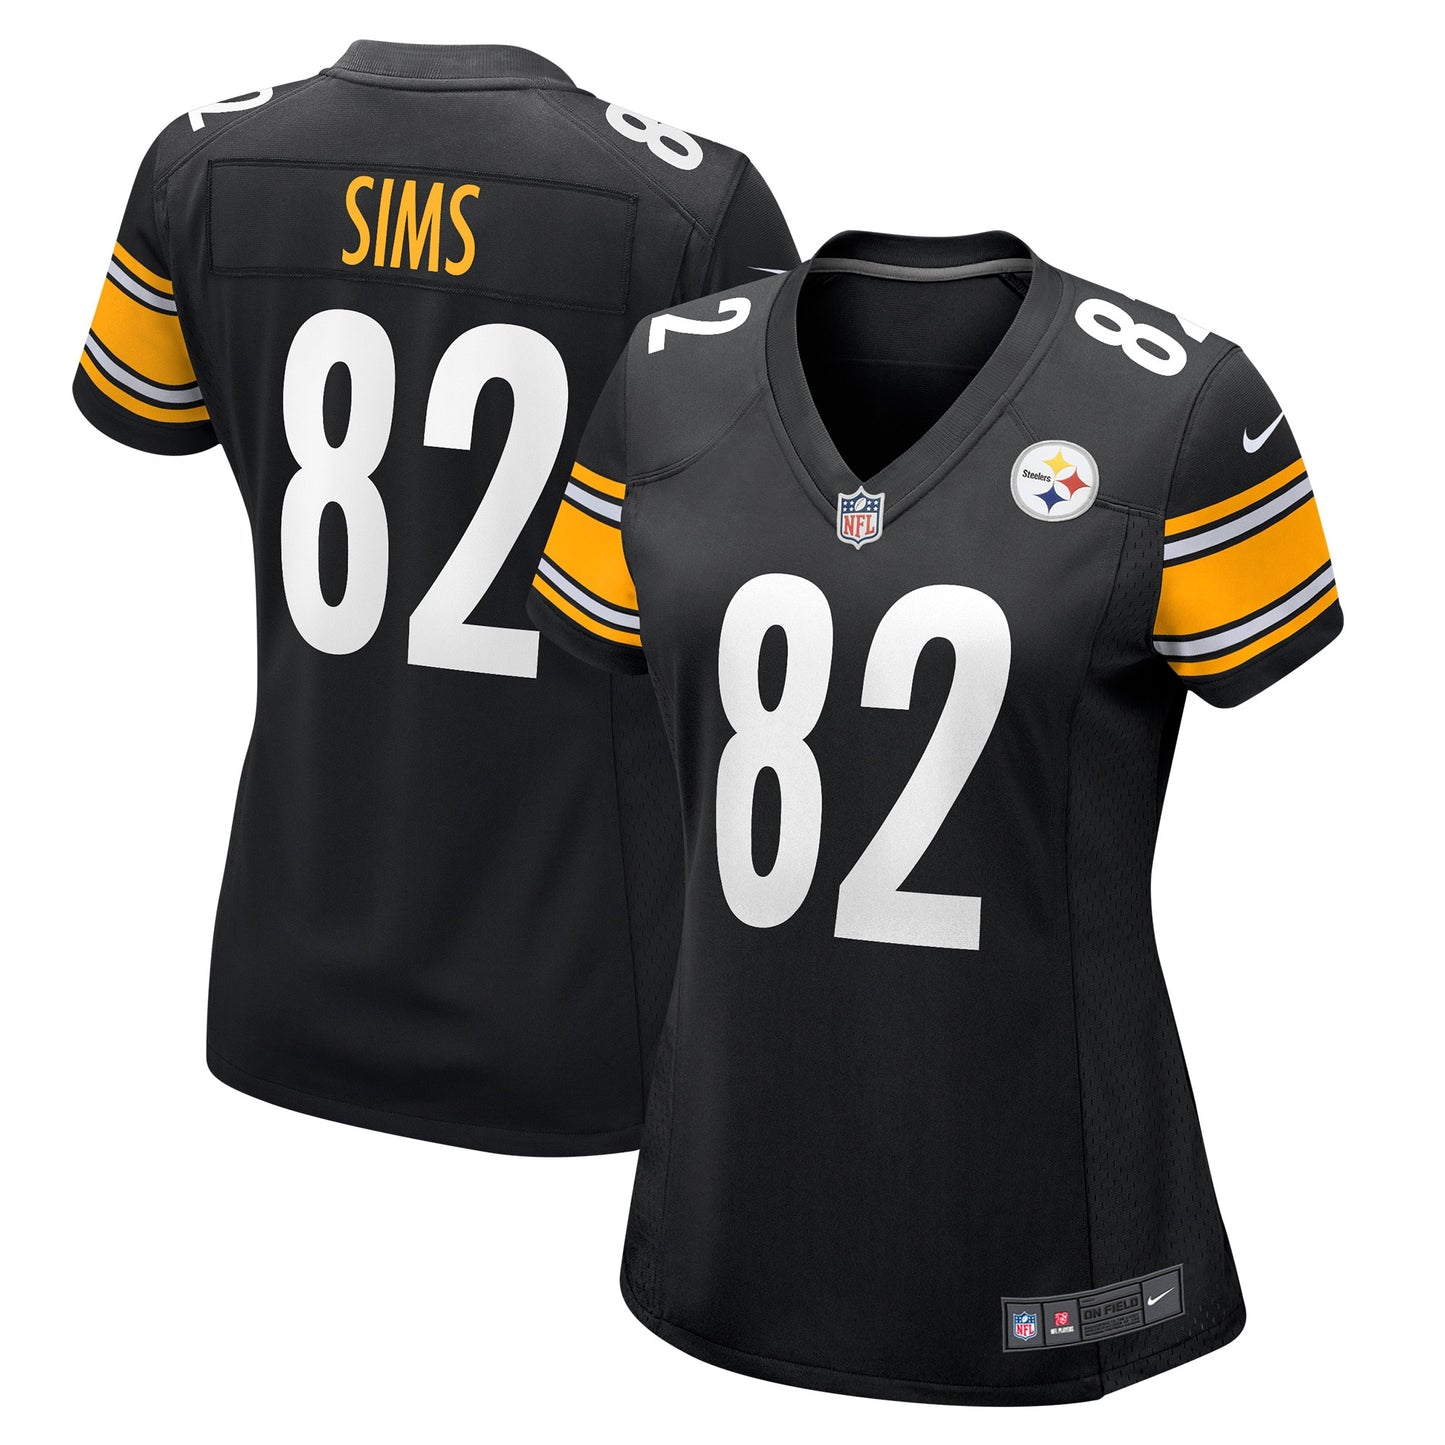 Steven Sims Pittsburgh Steelers Nike Women's Game Jersey - Black